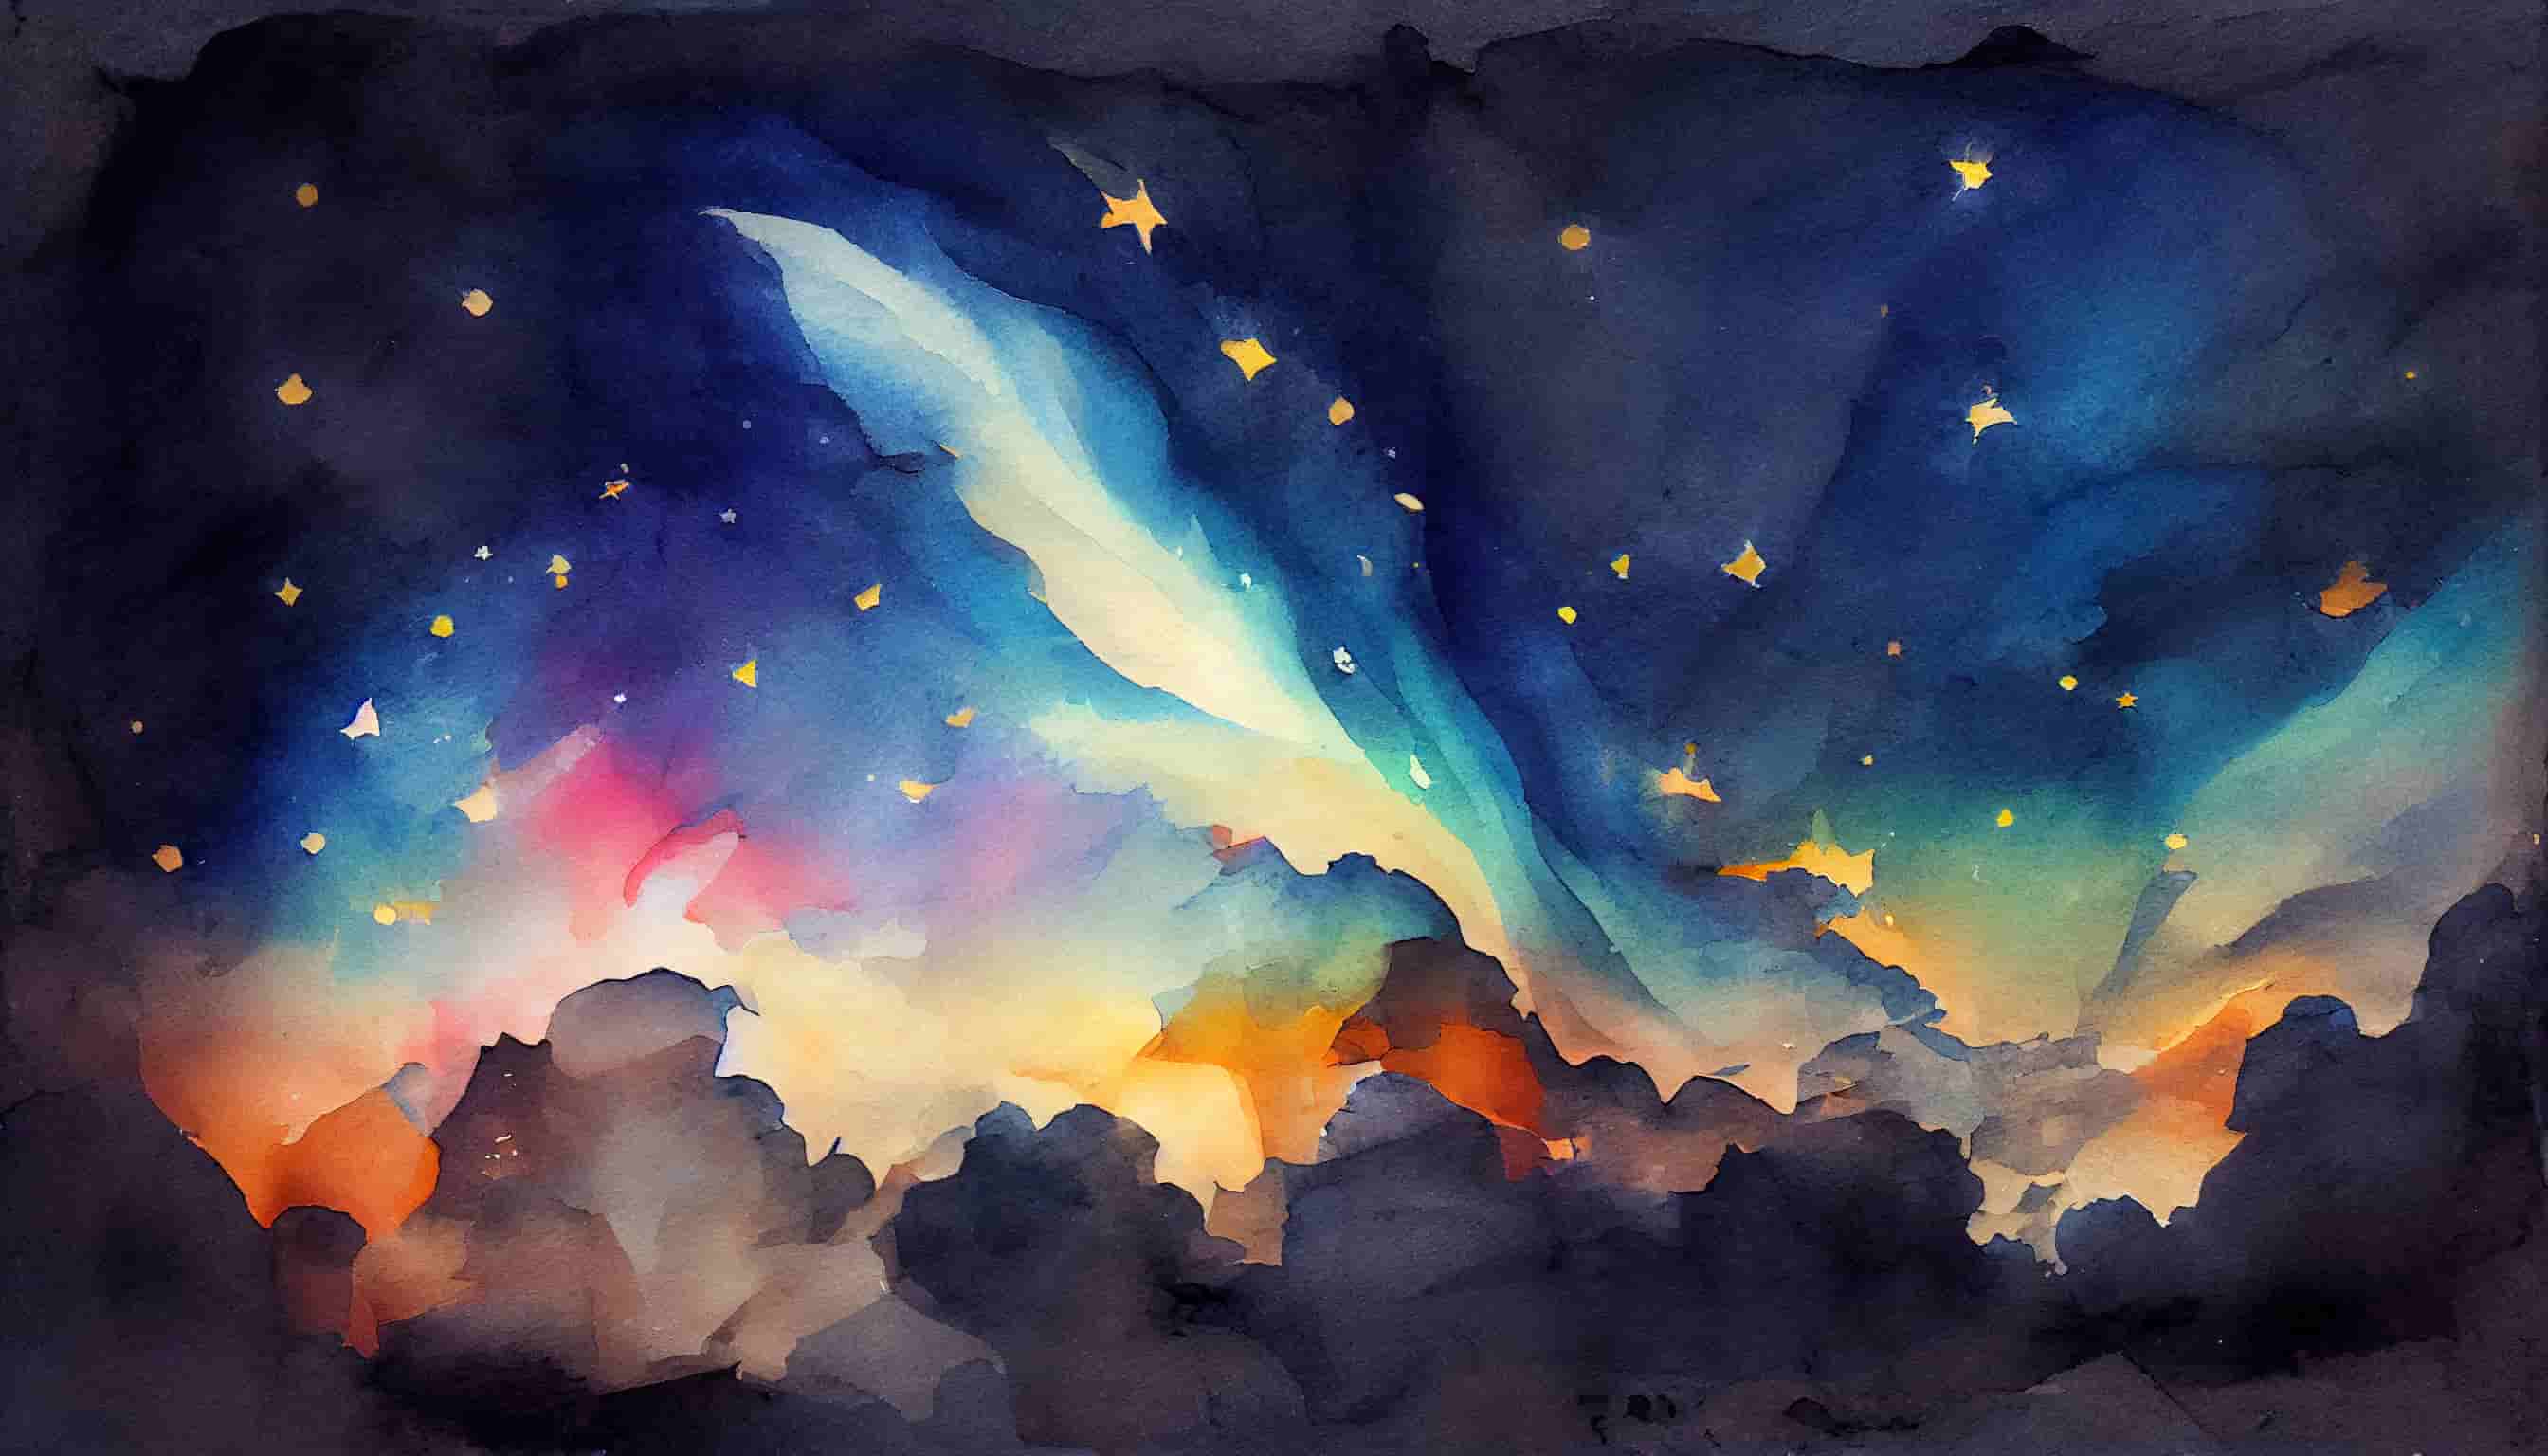 watercolor dreams soaring across a starry sky